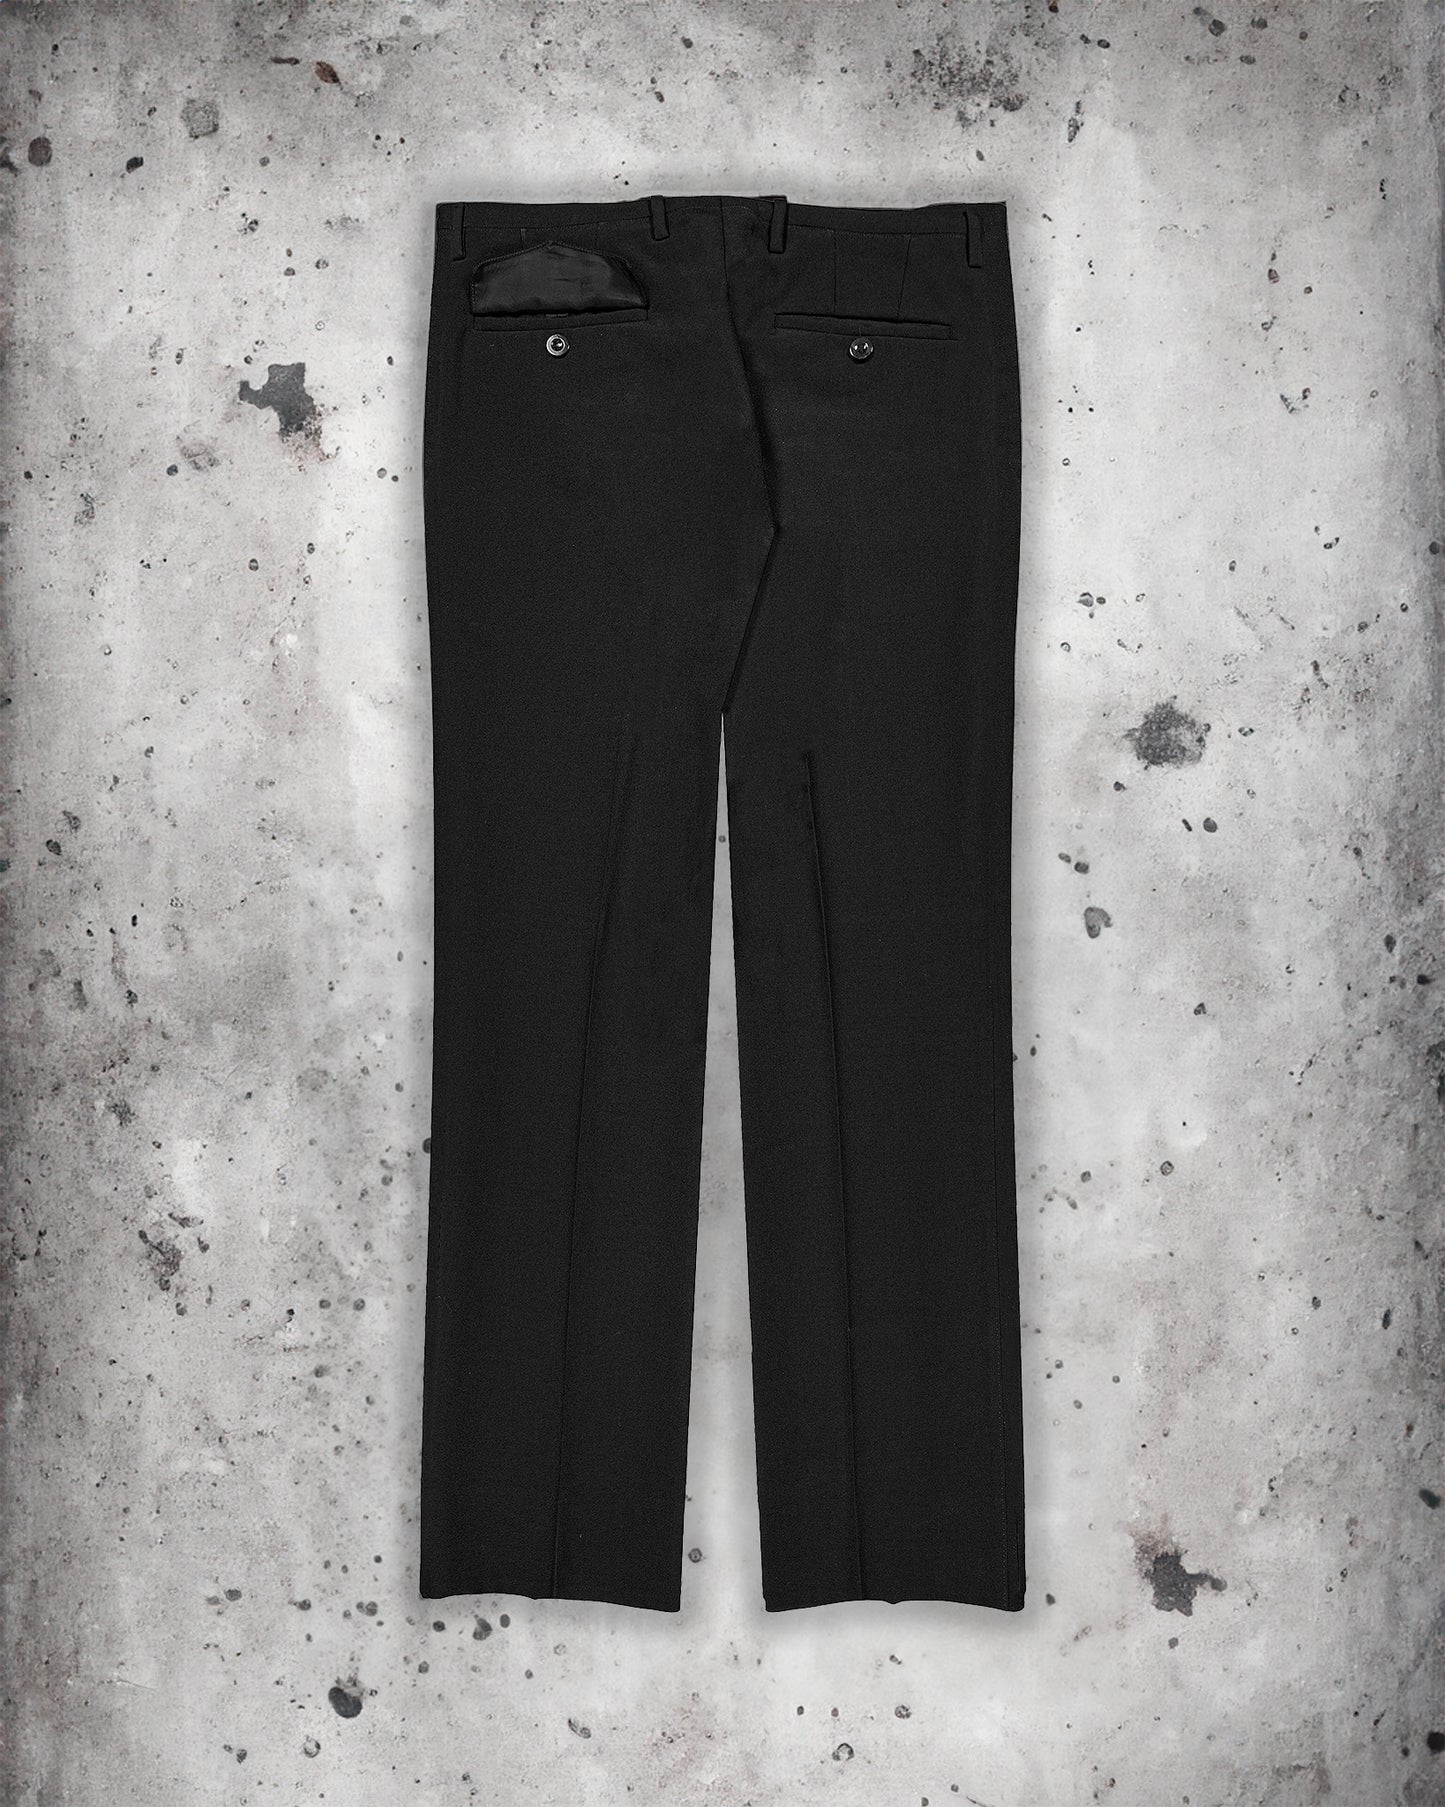 Carol Christian Poell Asymmetric Trousers - AW01 “Public Freedom” (PM/1517 SORG)